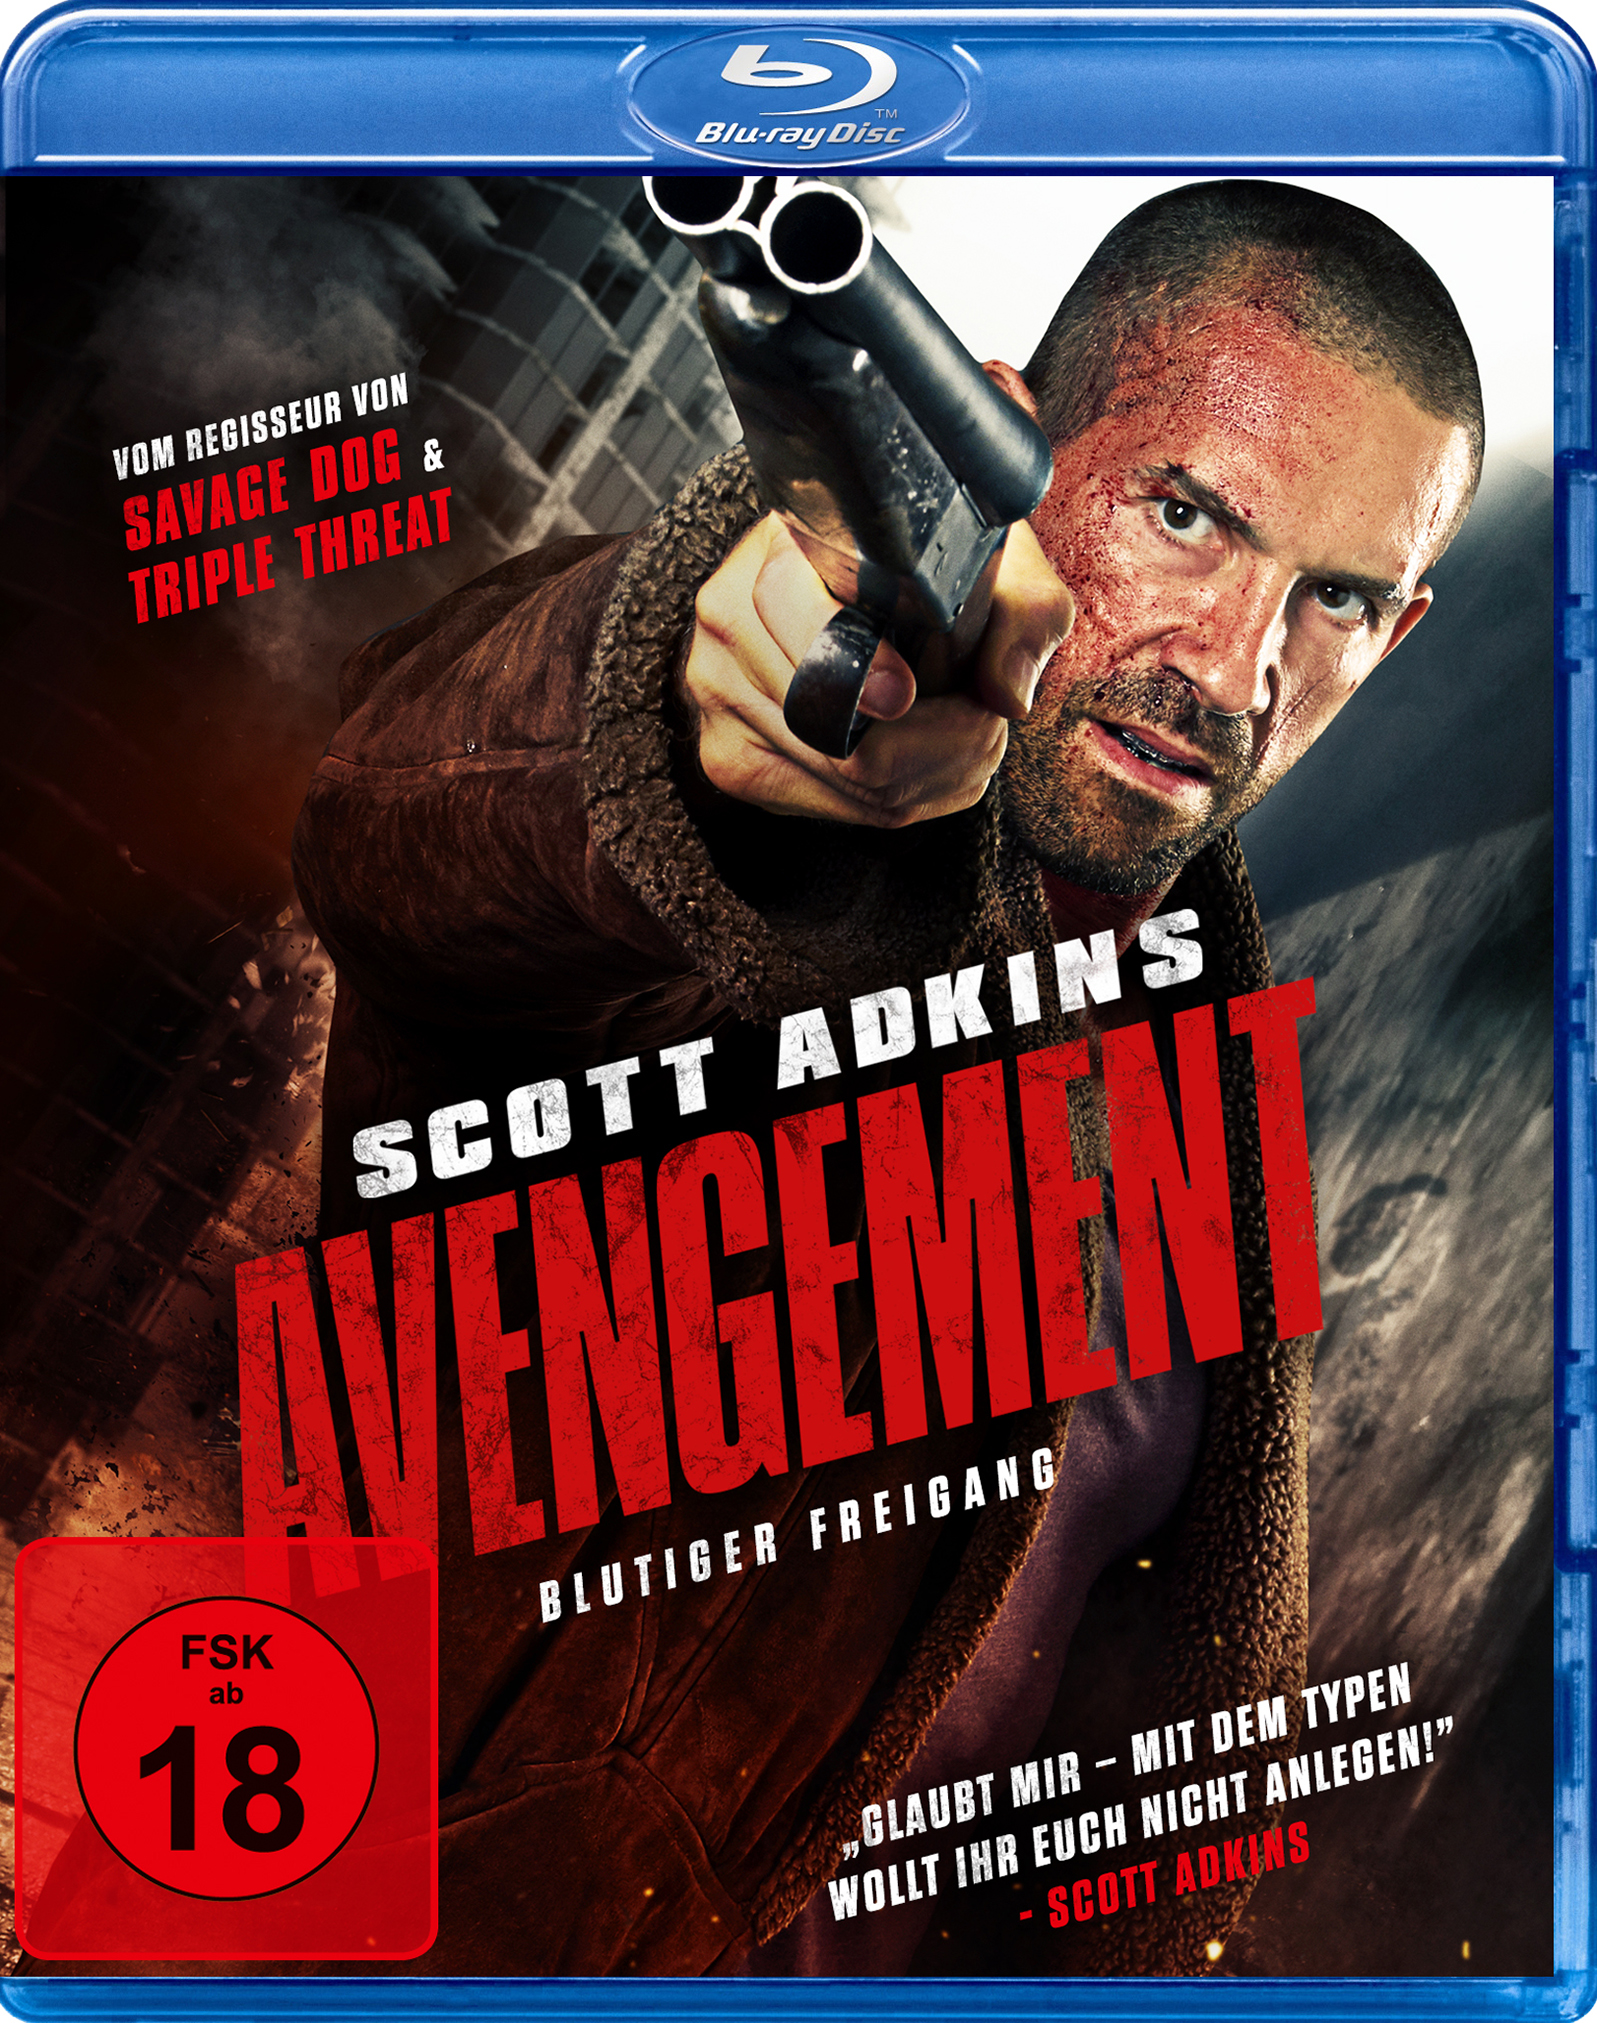 Avengement (Blu-ray)  Cover